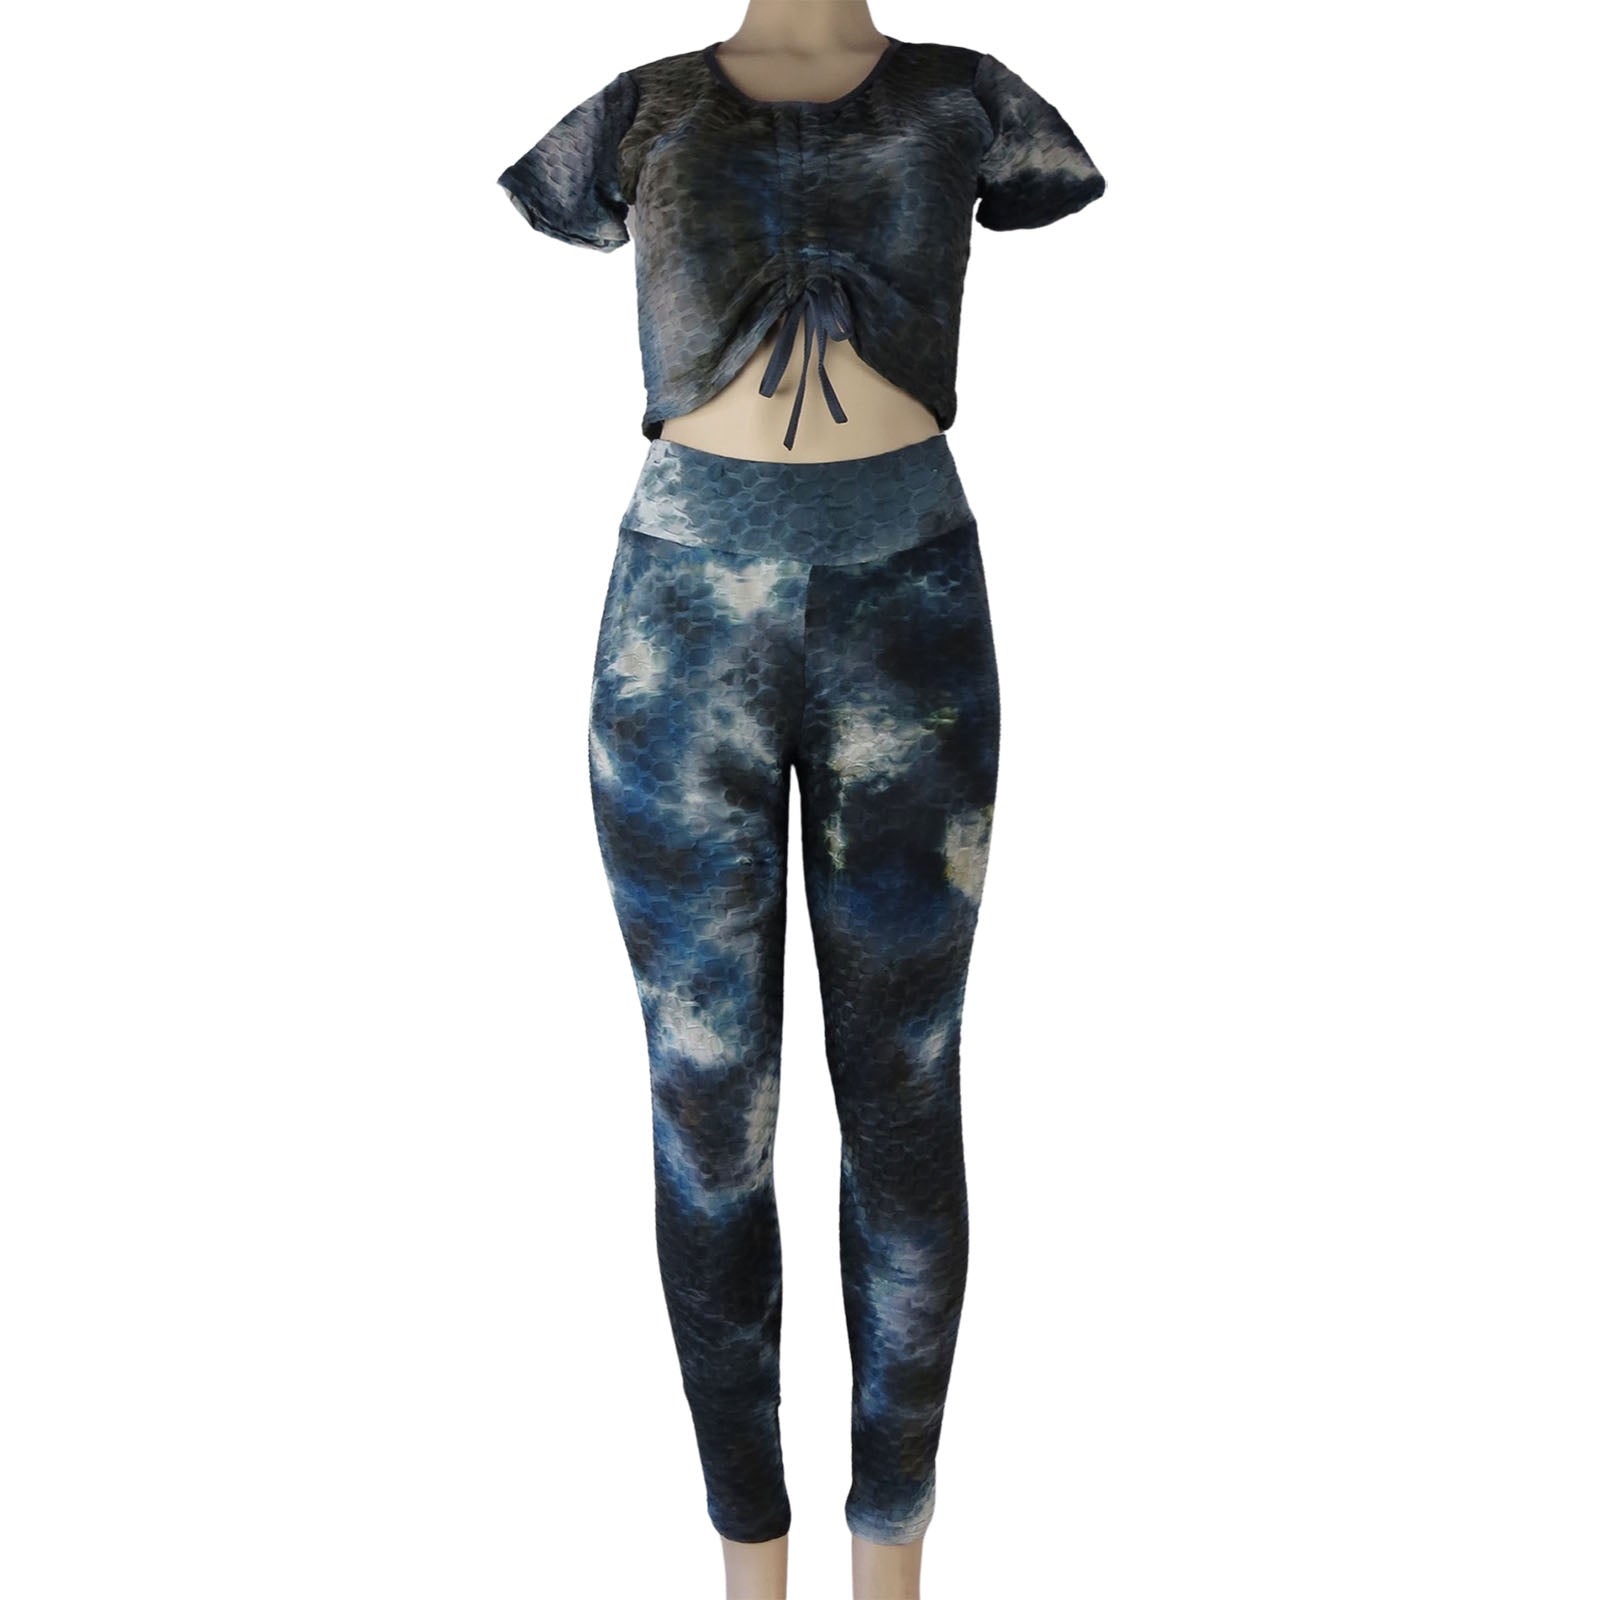 wholesale tiktok leggings 2 piece set crop top and high waist anti cellulite leggings tie dye black and gray